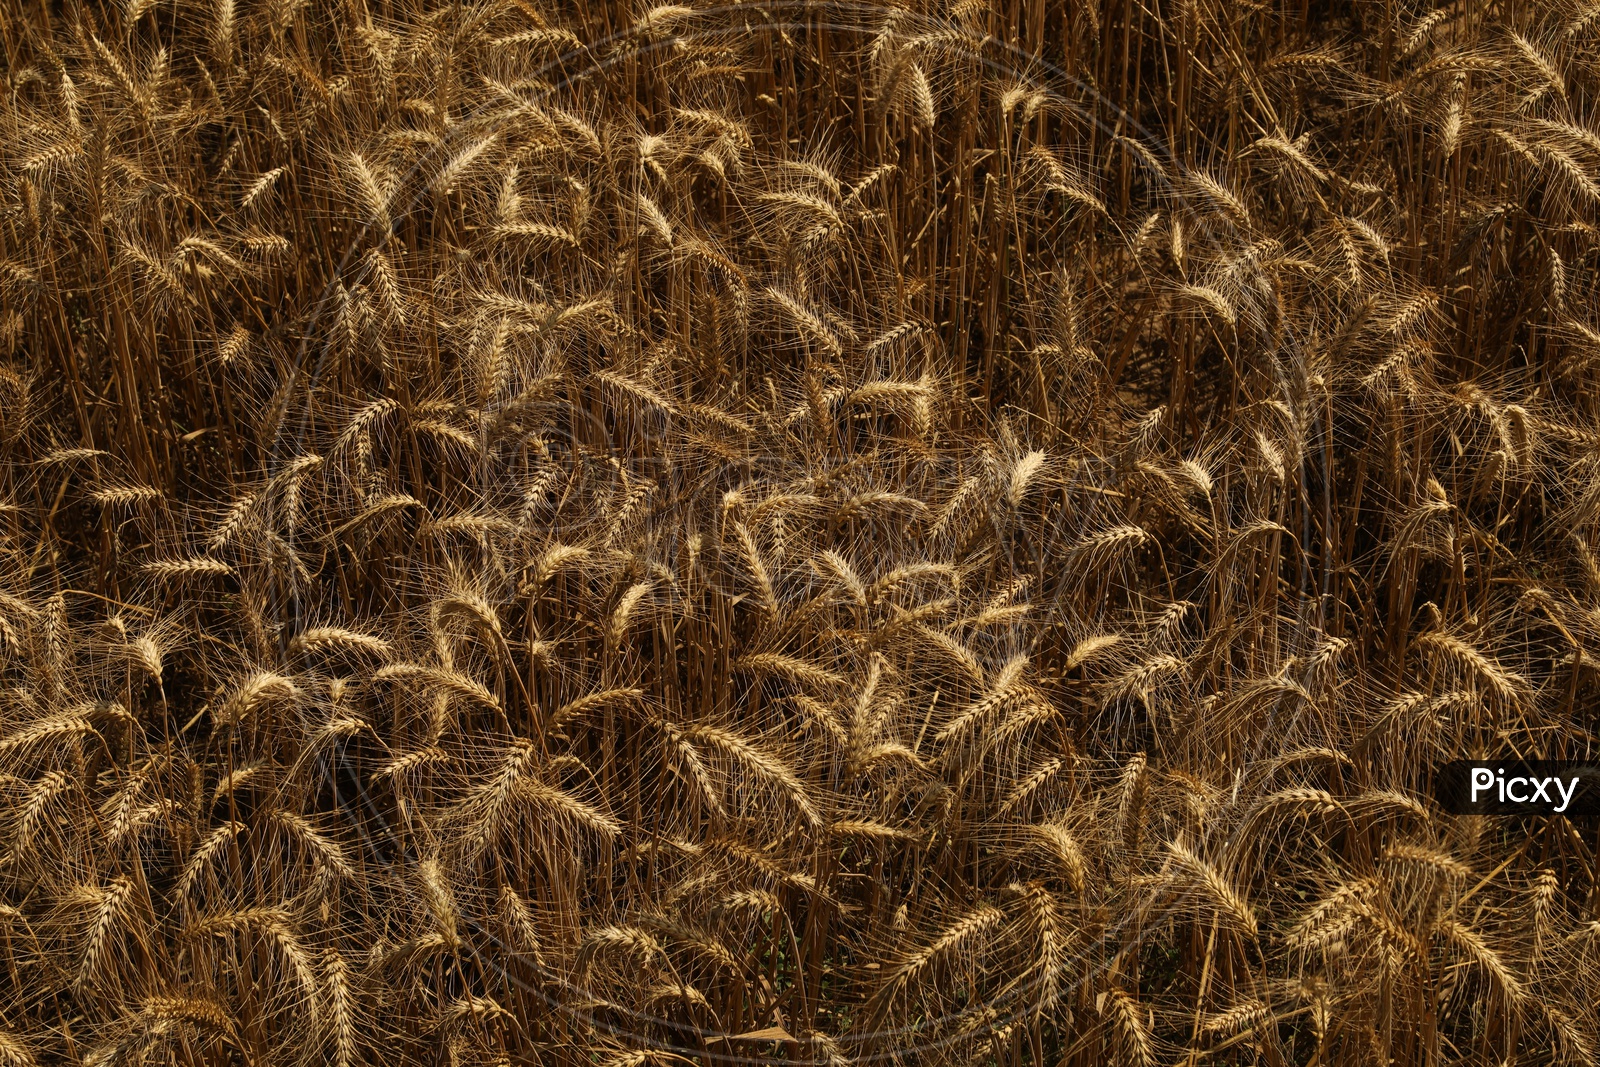 photograph of wheat plants